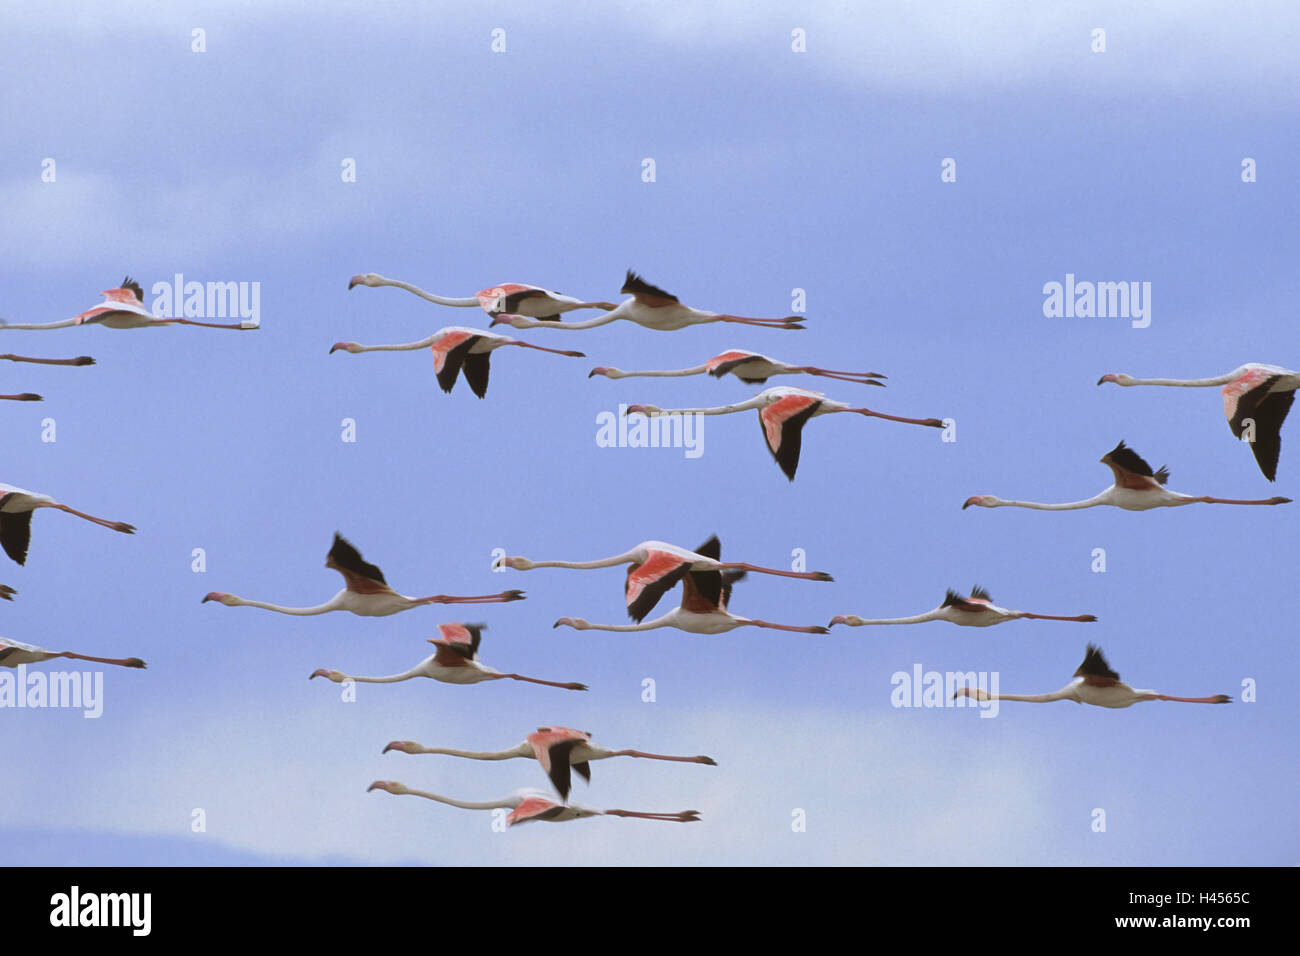 Flamingo, Rosaflamingo, Phoenicopteridae, strömen Vögel, fliegen, Stockfoto